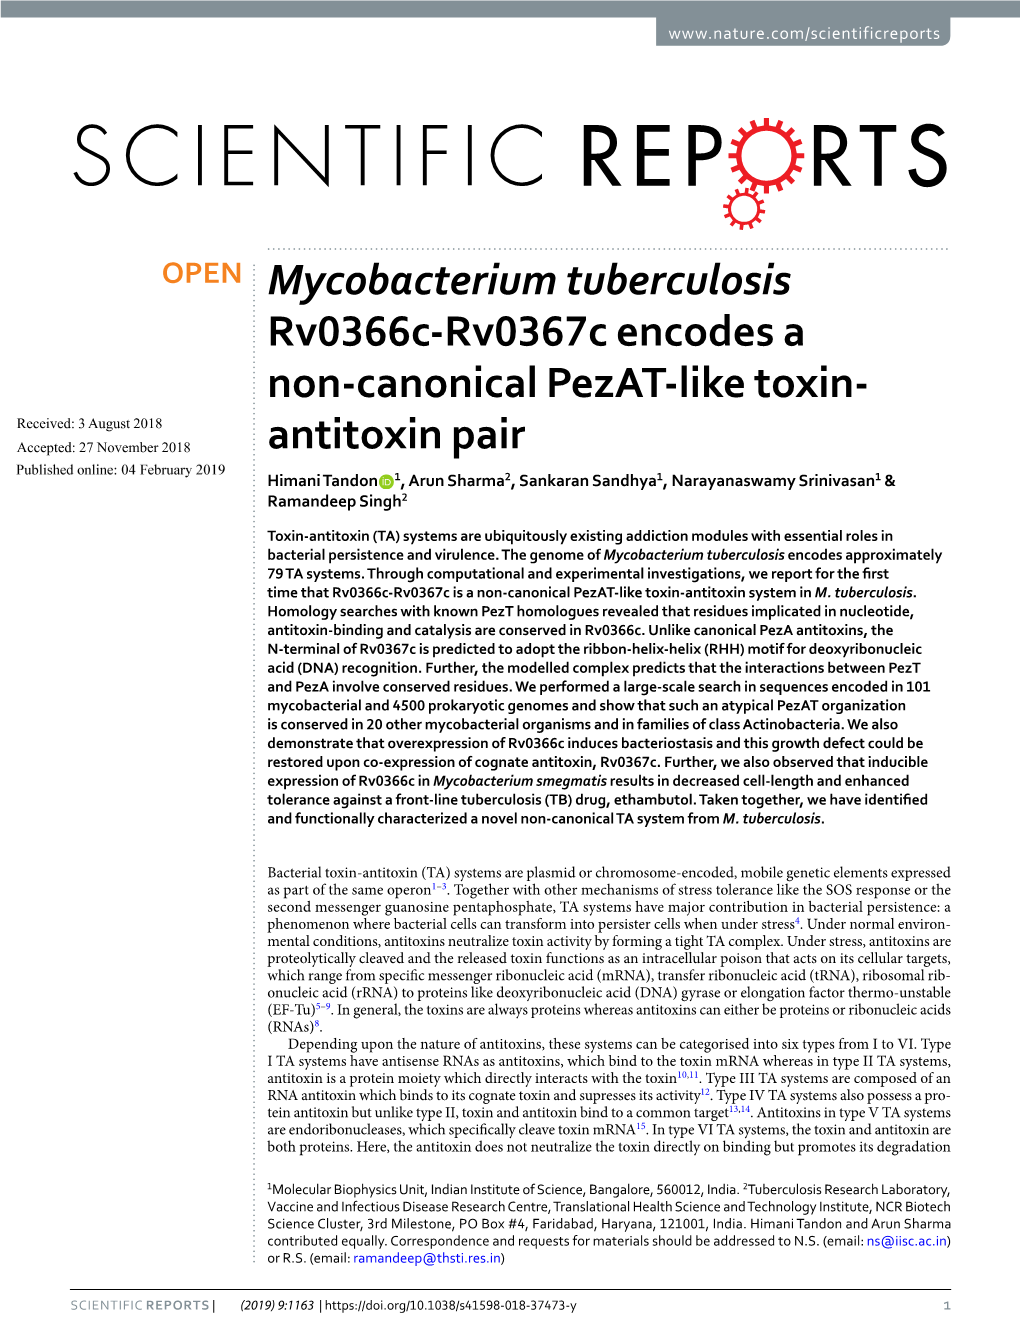 Mycobacterium Tuberculosis Rv0366c-Rv0367c Encodes a Non